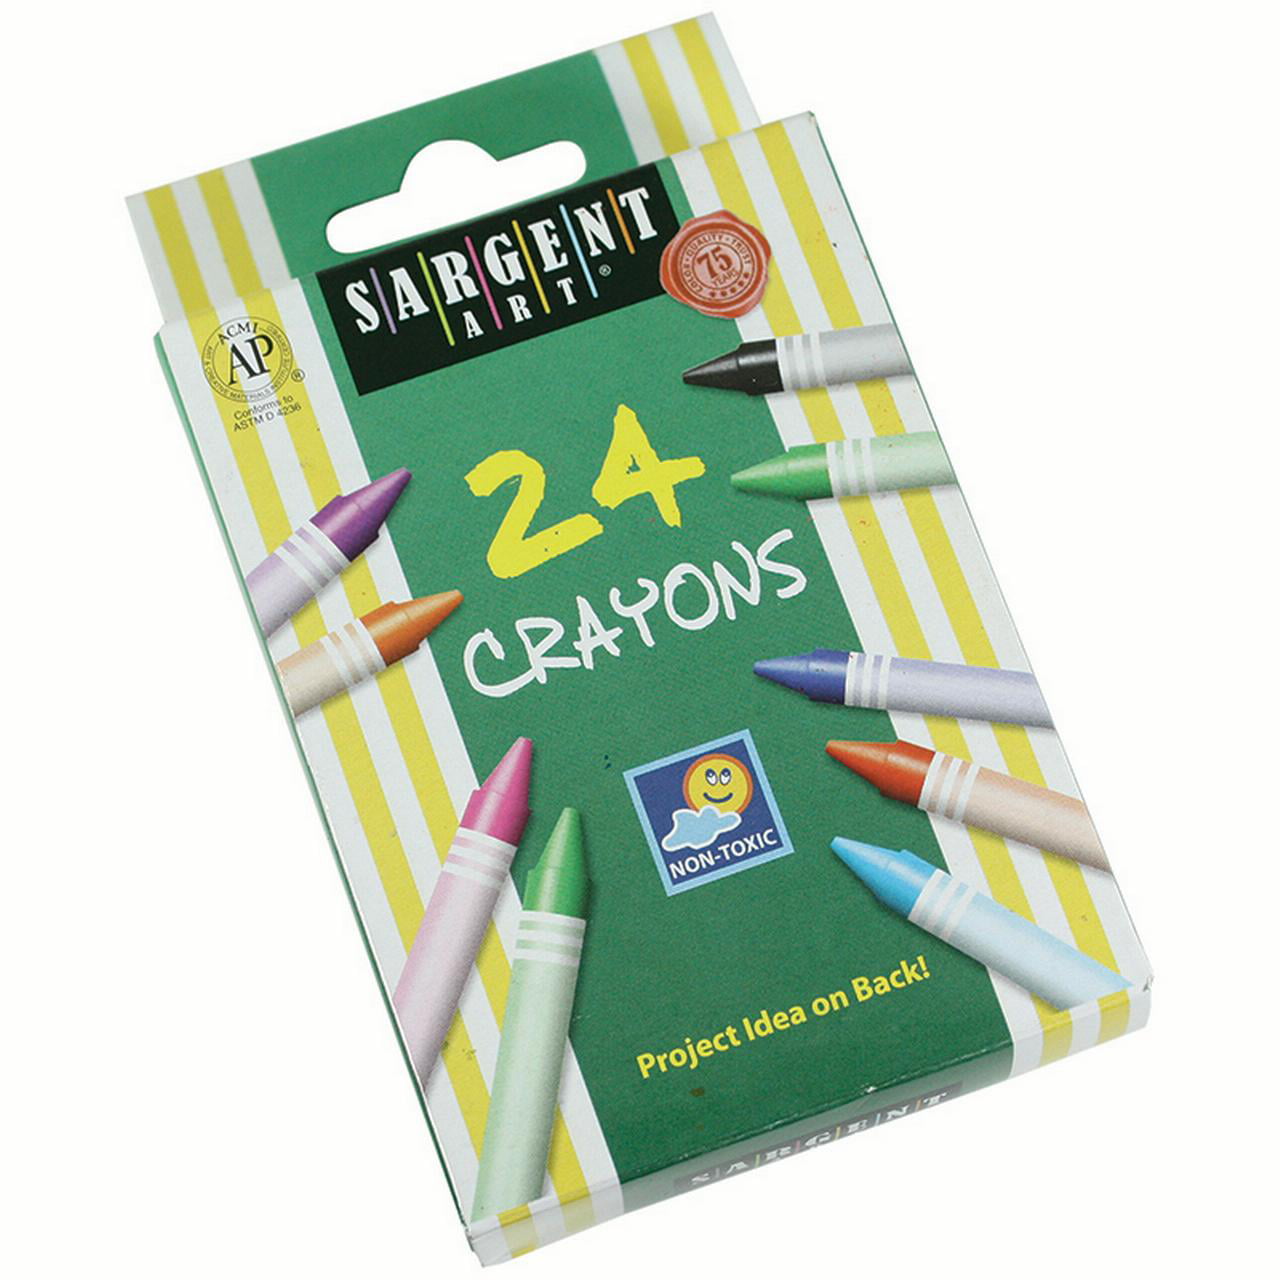 Kids Crayon Holiday Gift Art Supplies Crayons Original Rainbow Crayon®  Crayon Stix Set of 4 Crayons, Boy Gift, Unique Birthday Gift 